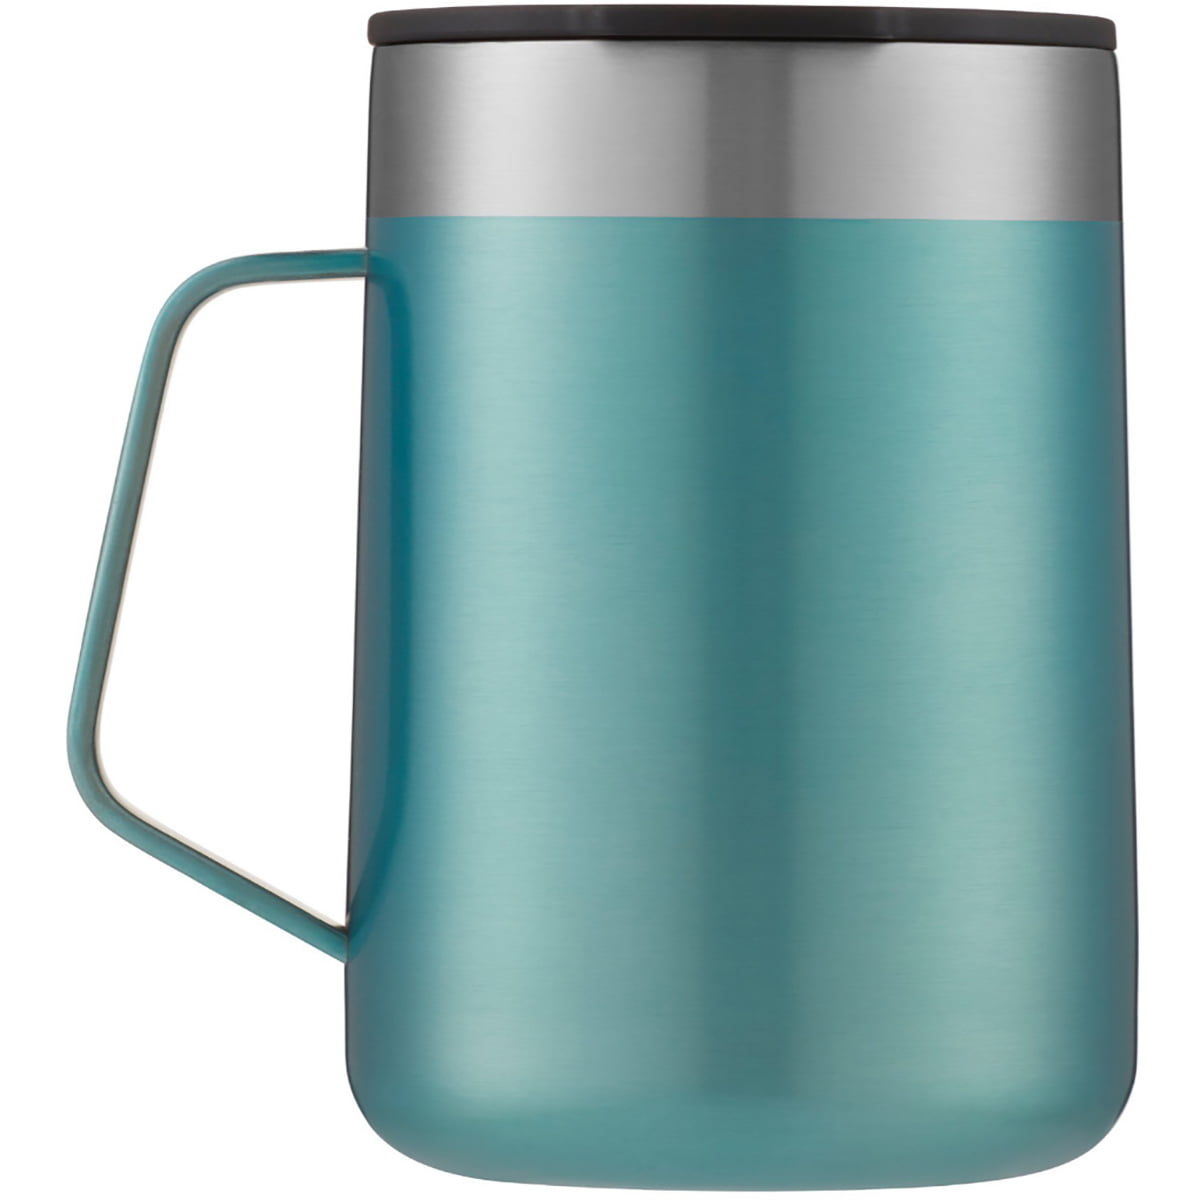 Contigo® Streeterville Stainless Steel Mug with Handle, 14 oz - Kroger